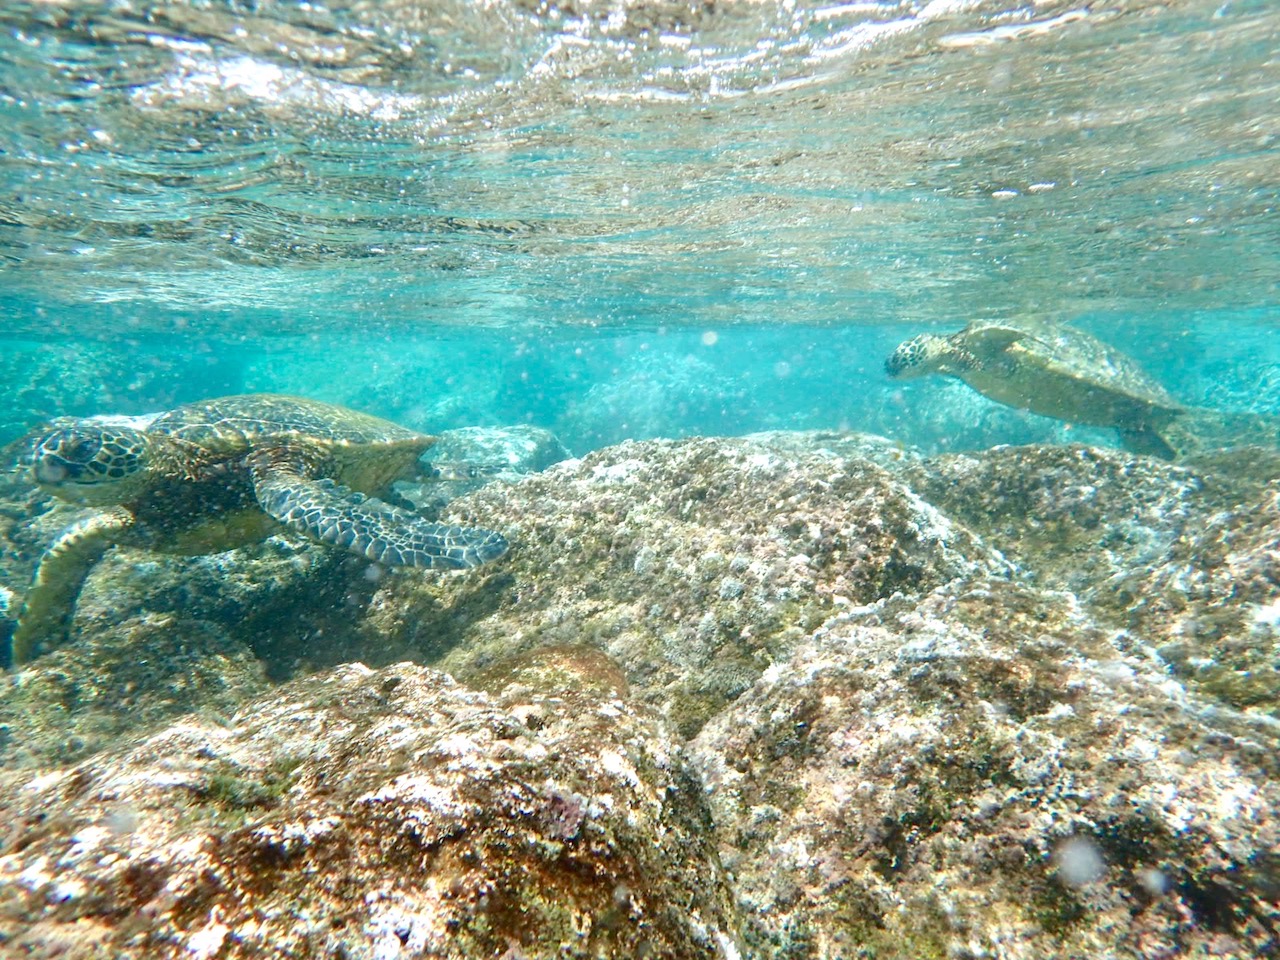 Snorkeling at Shark's Cove - Turtles